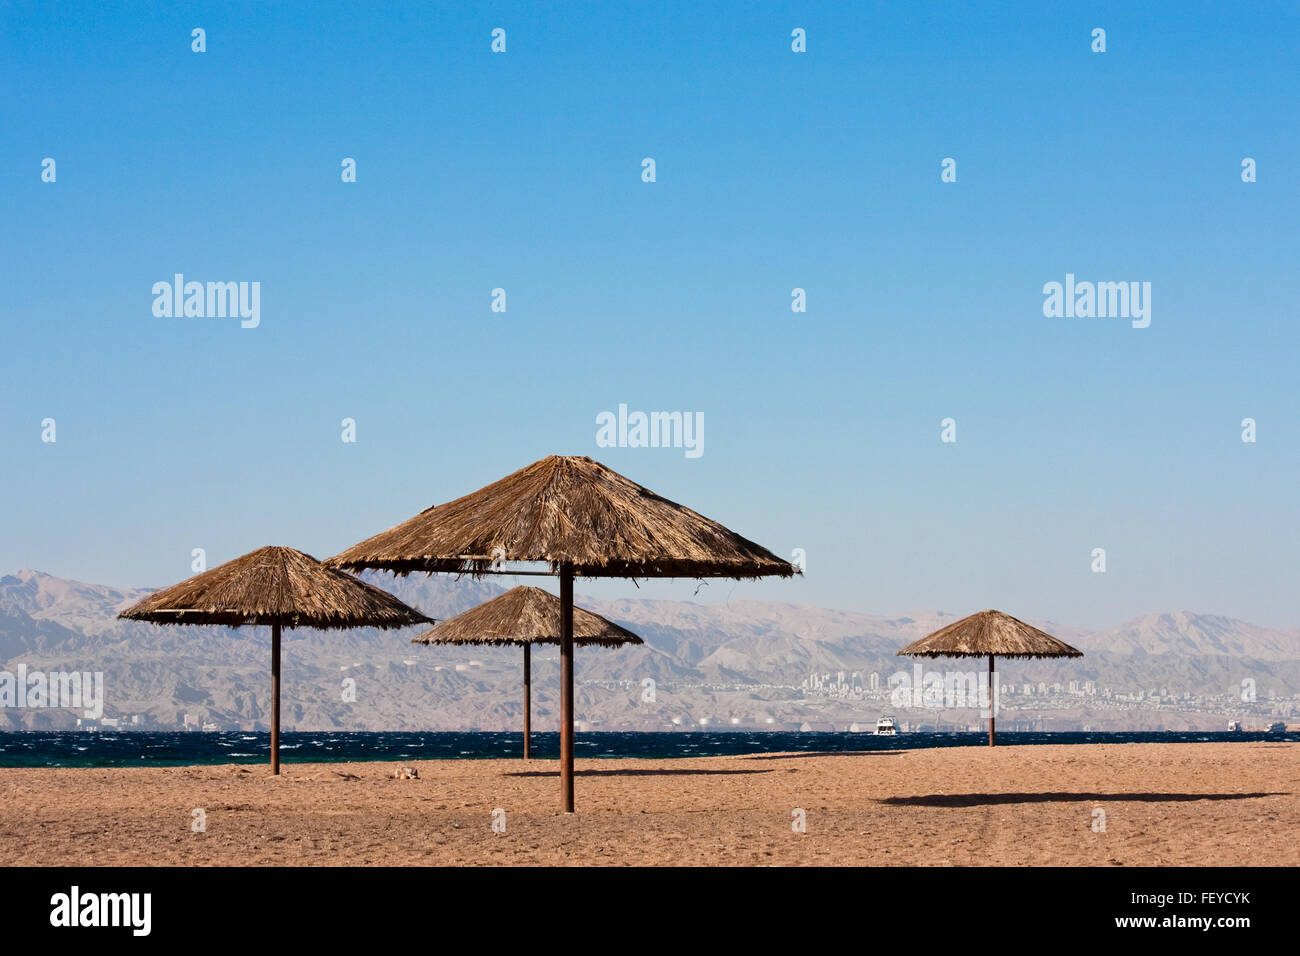 Sunshades near on beach of the Read Sea in Aqaba, Jordan. City of Eilat, Egypt in background. Stock Photo